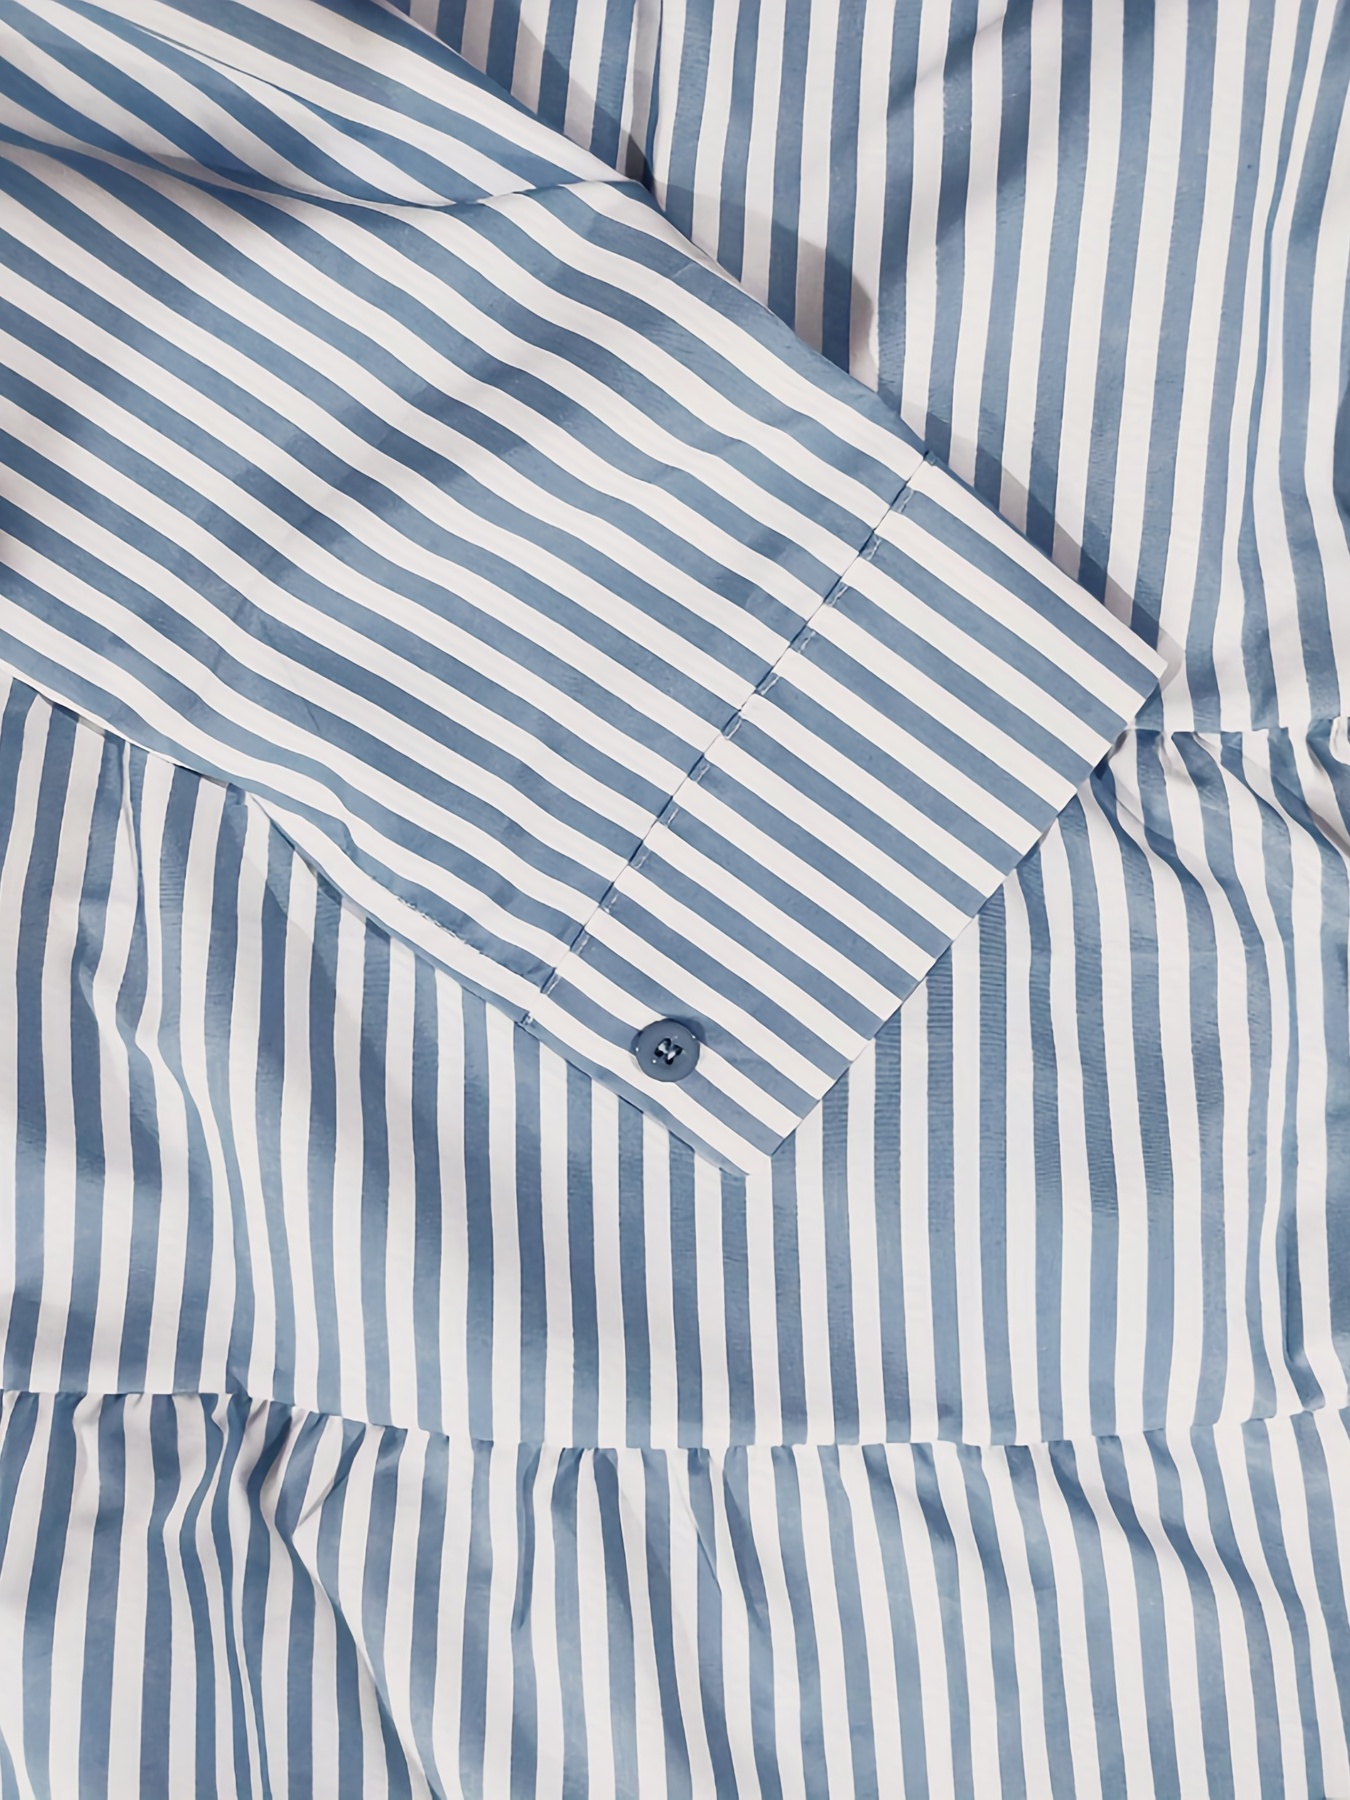 Layering Tee Long Sleeve Women's Casual Top Shirts Stripe